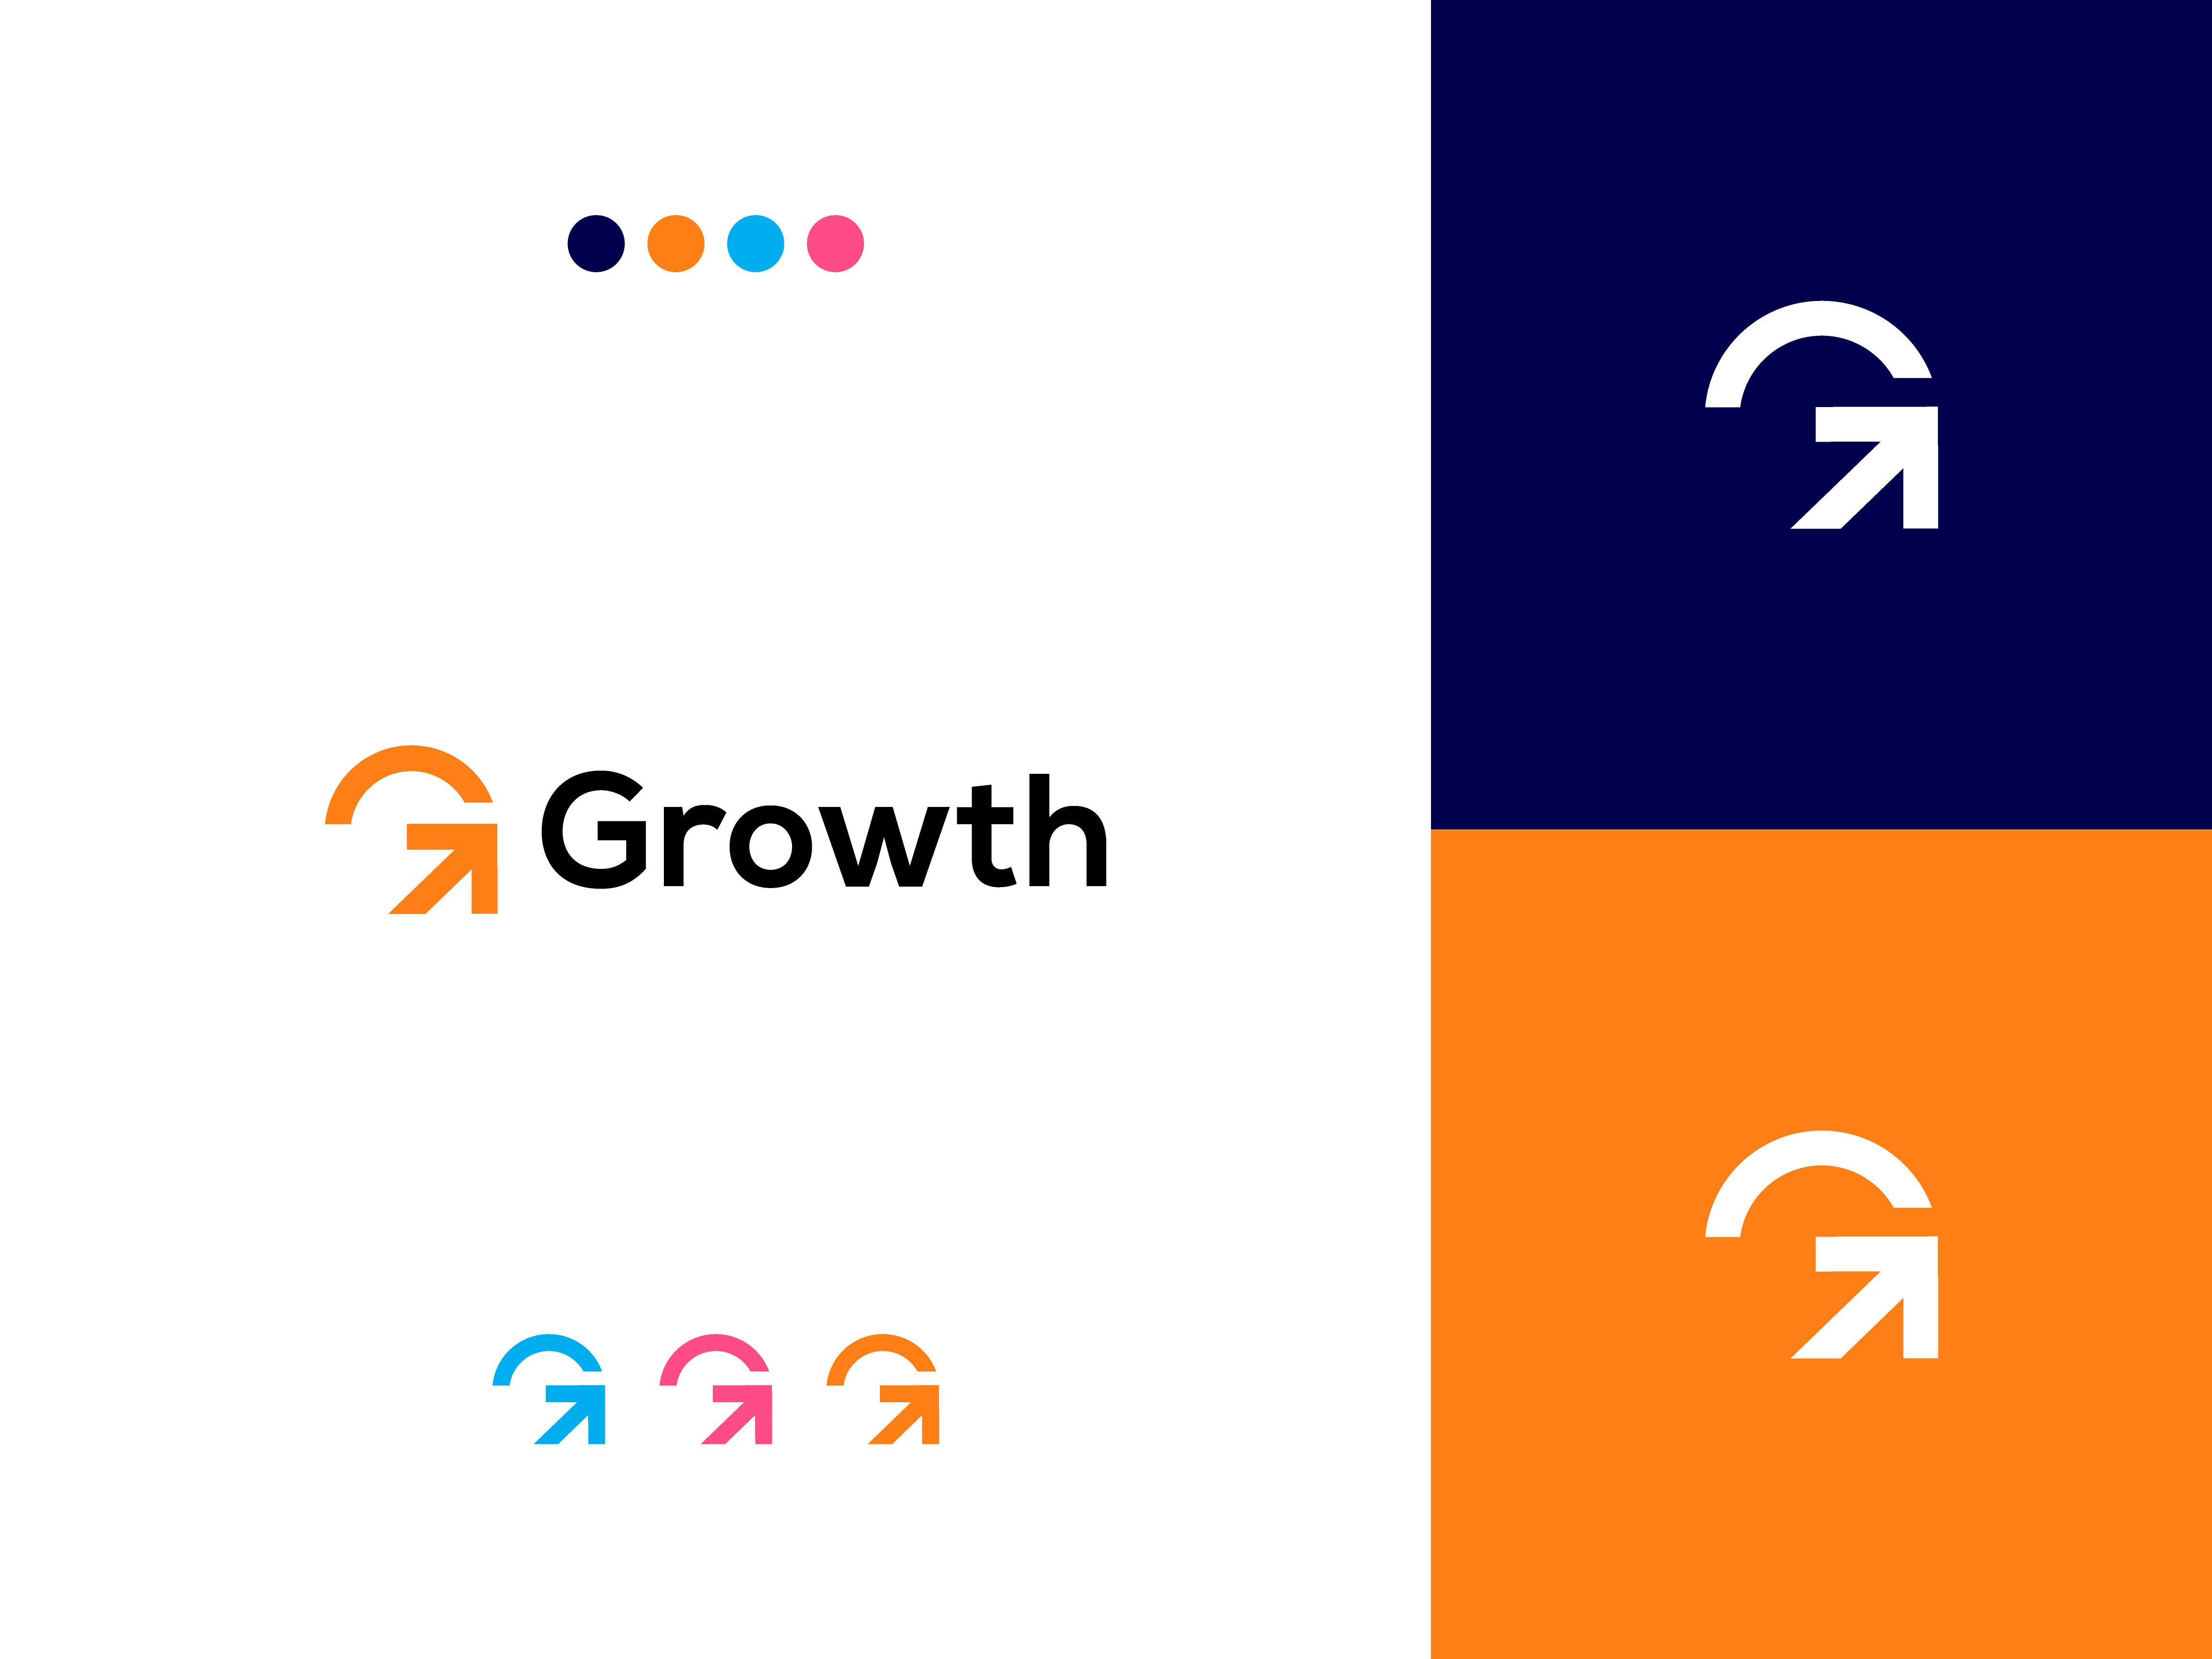 Business Growth Logo Design Template Stock Vector - Illustration of leaf,  symbol: 106476878